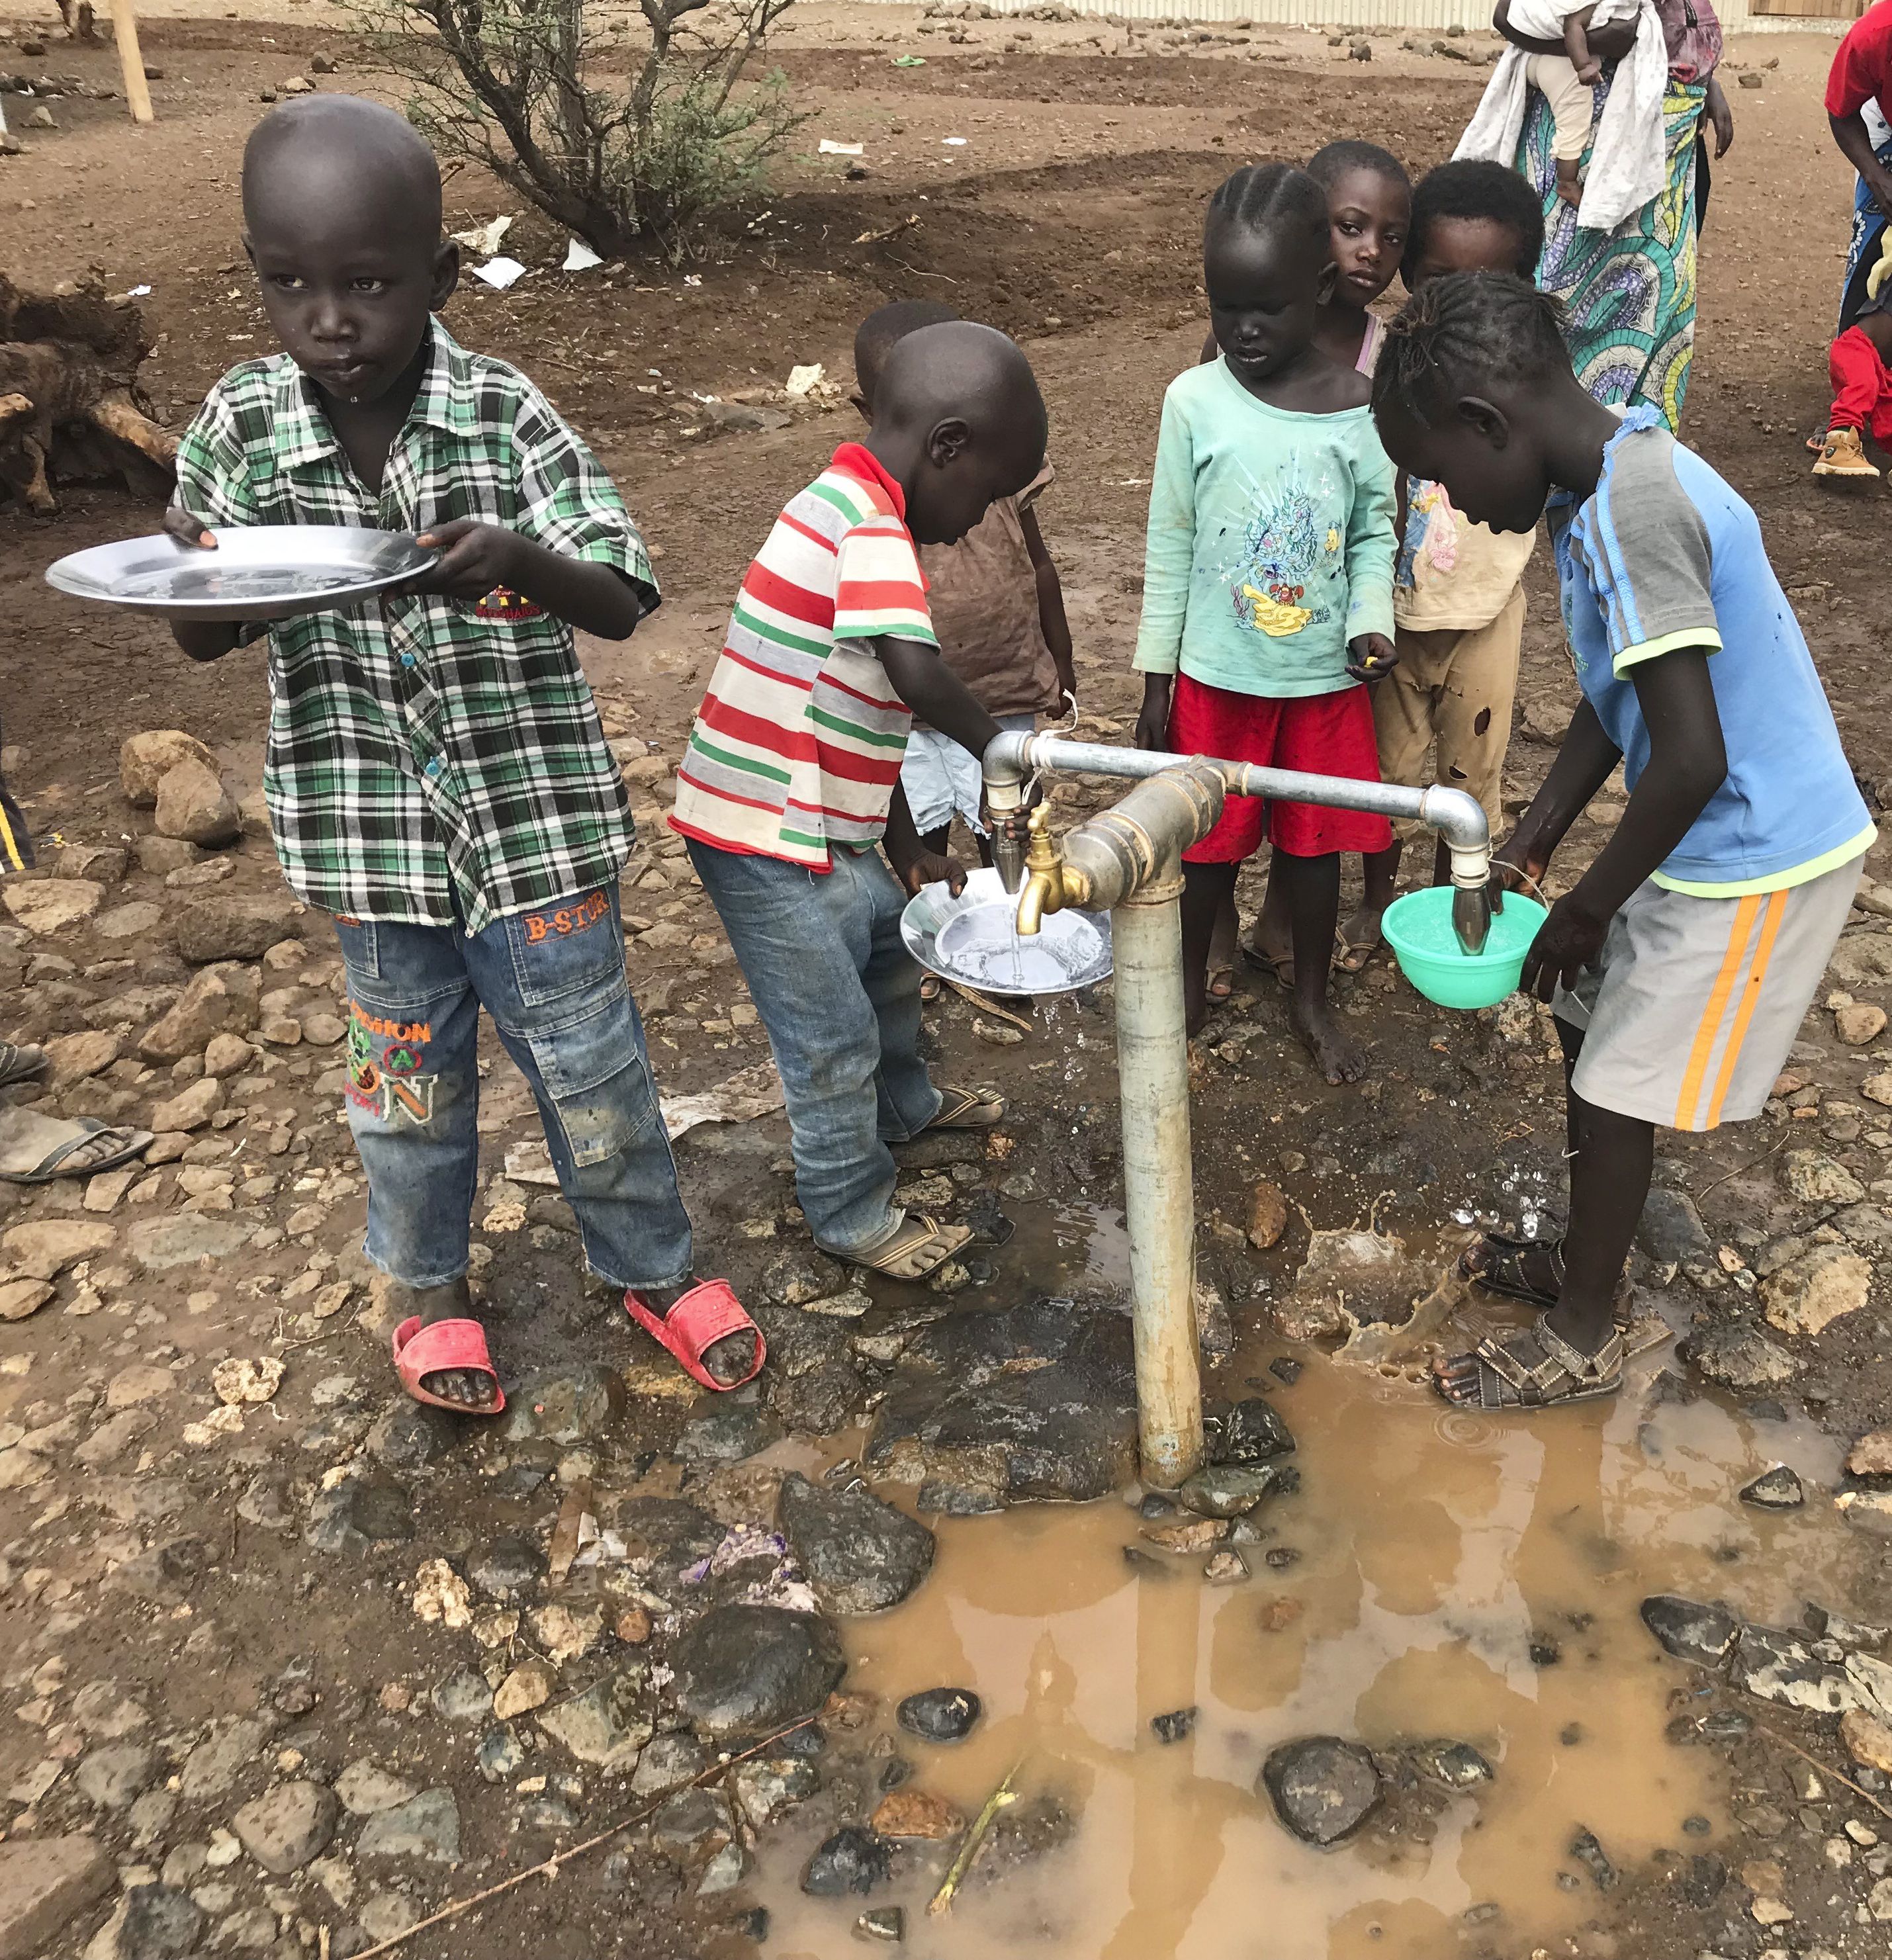 Children at Kalobeyei Friends School take a water break. The school’s 5,815 students meet in makeshift classrooms and sit on mats spread on dirt floors. Image by Jaime Joyce. Kenya, 2018.